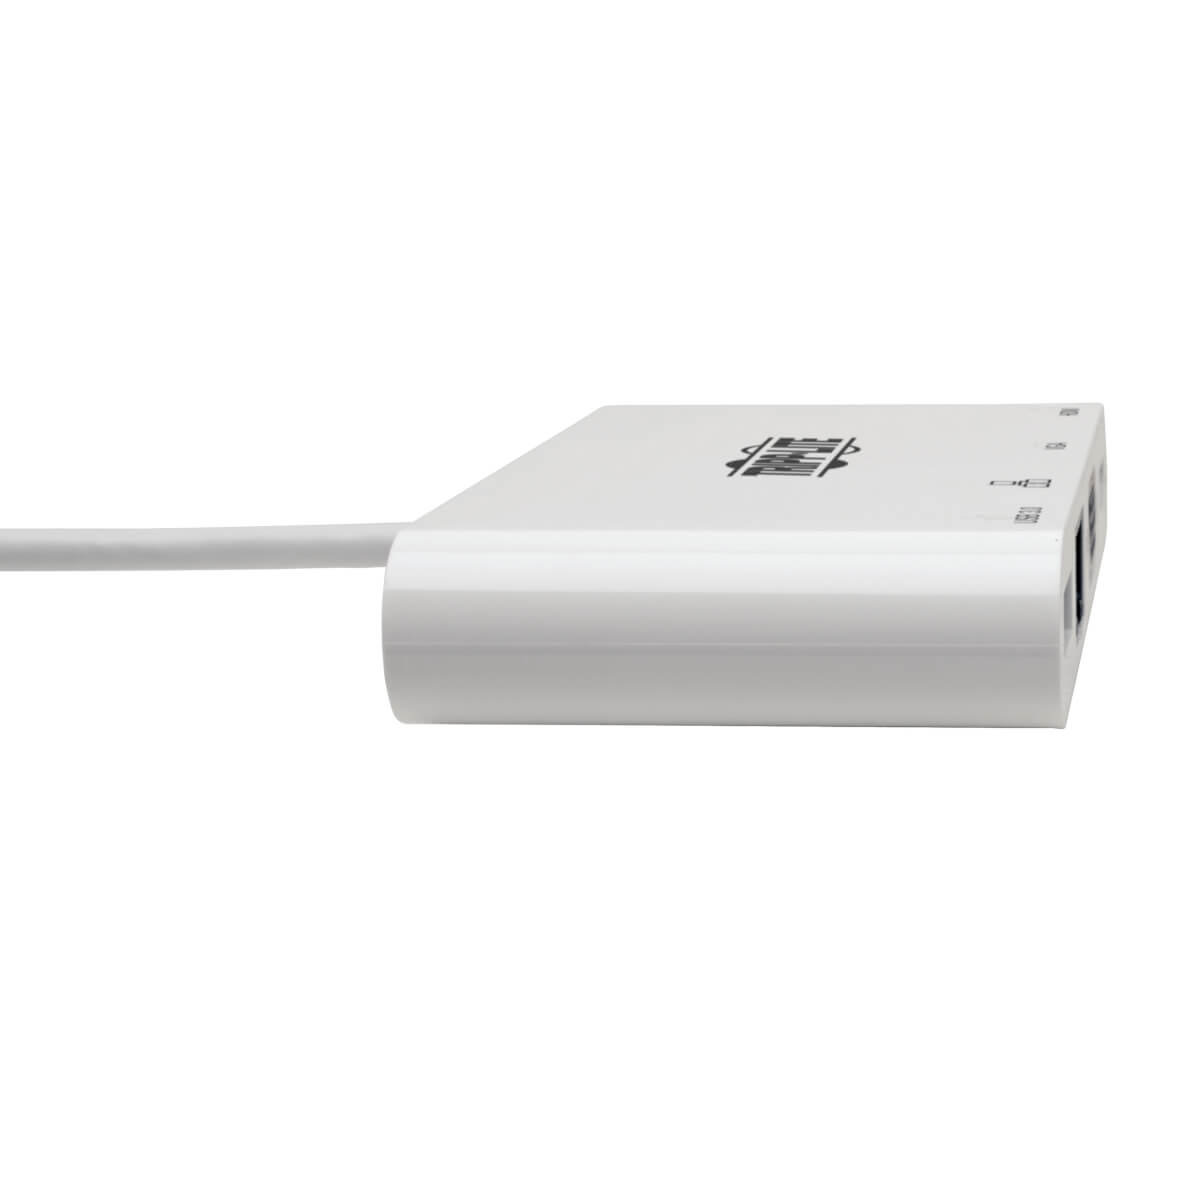 USB-C Multiport Adapter White